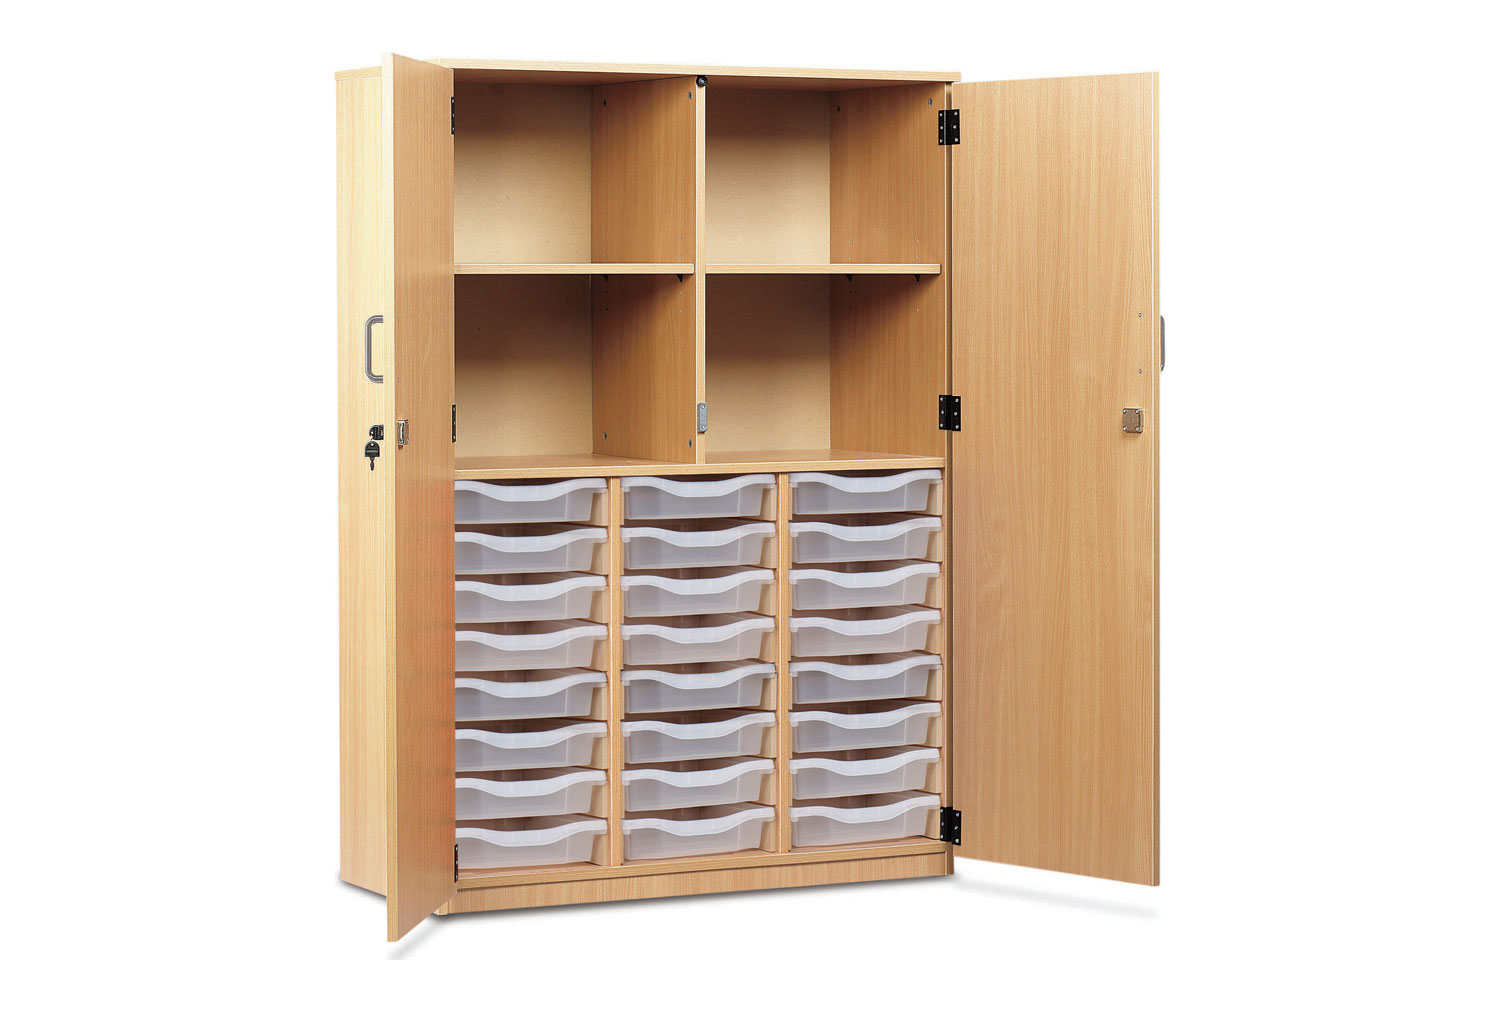 24 Tray Storage Classroom Cupboard With Full Doors, Green Trays